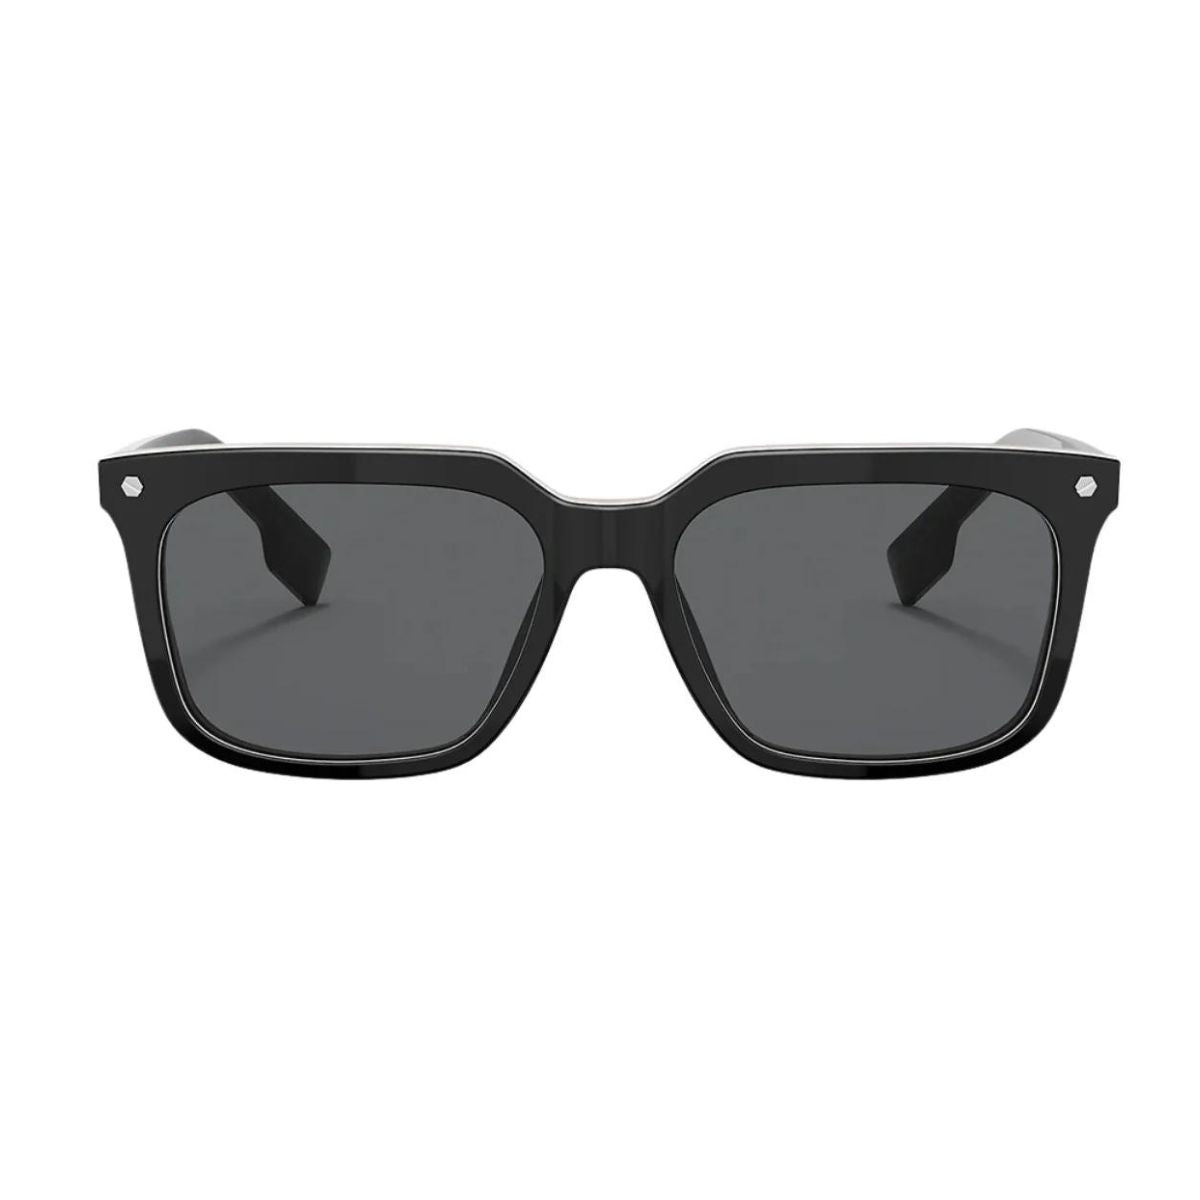 "Buy Burberry 4337 3798/87  UV Sunglasses For Men's and Women's At Optorium"